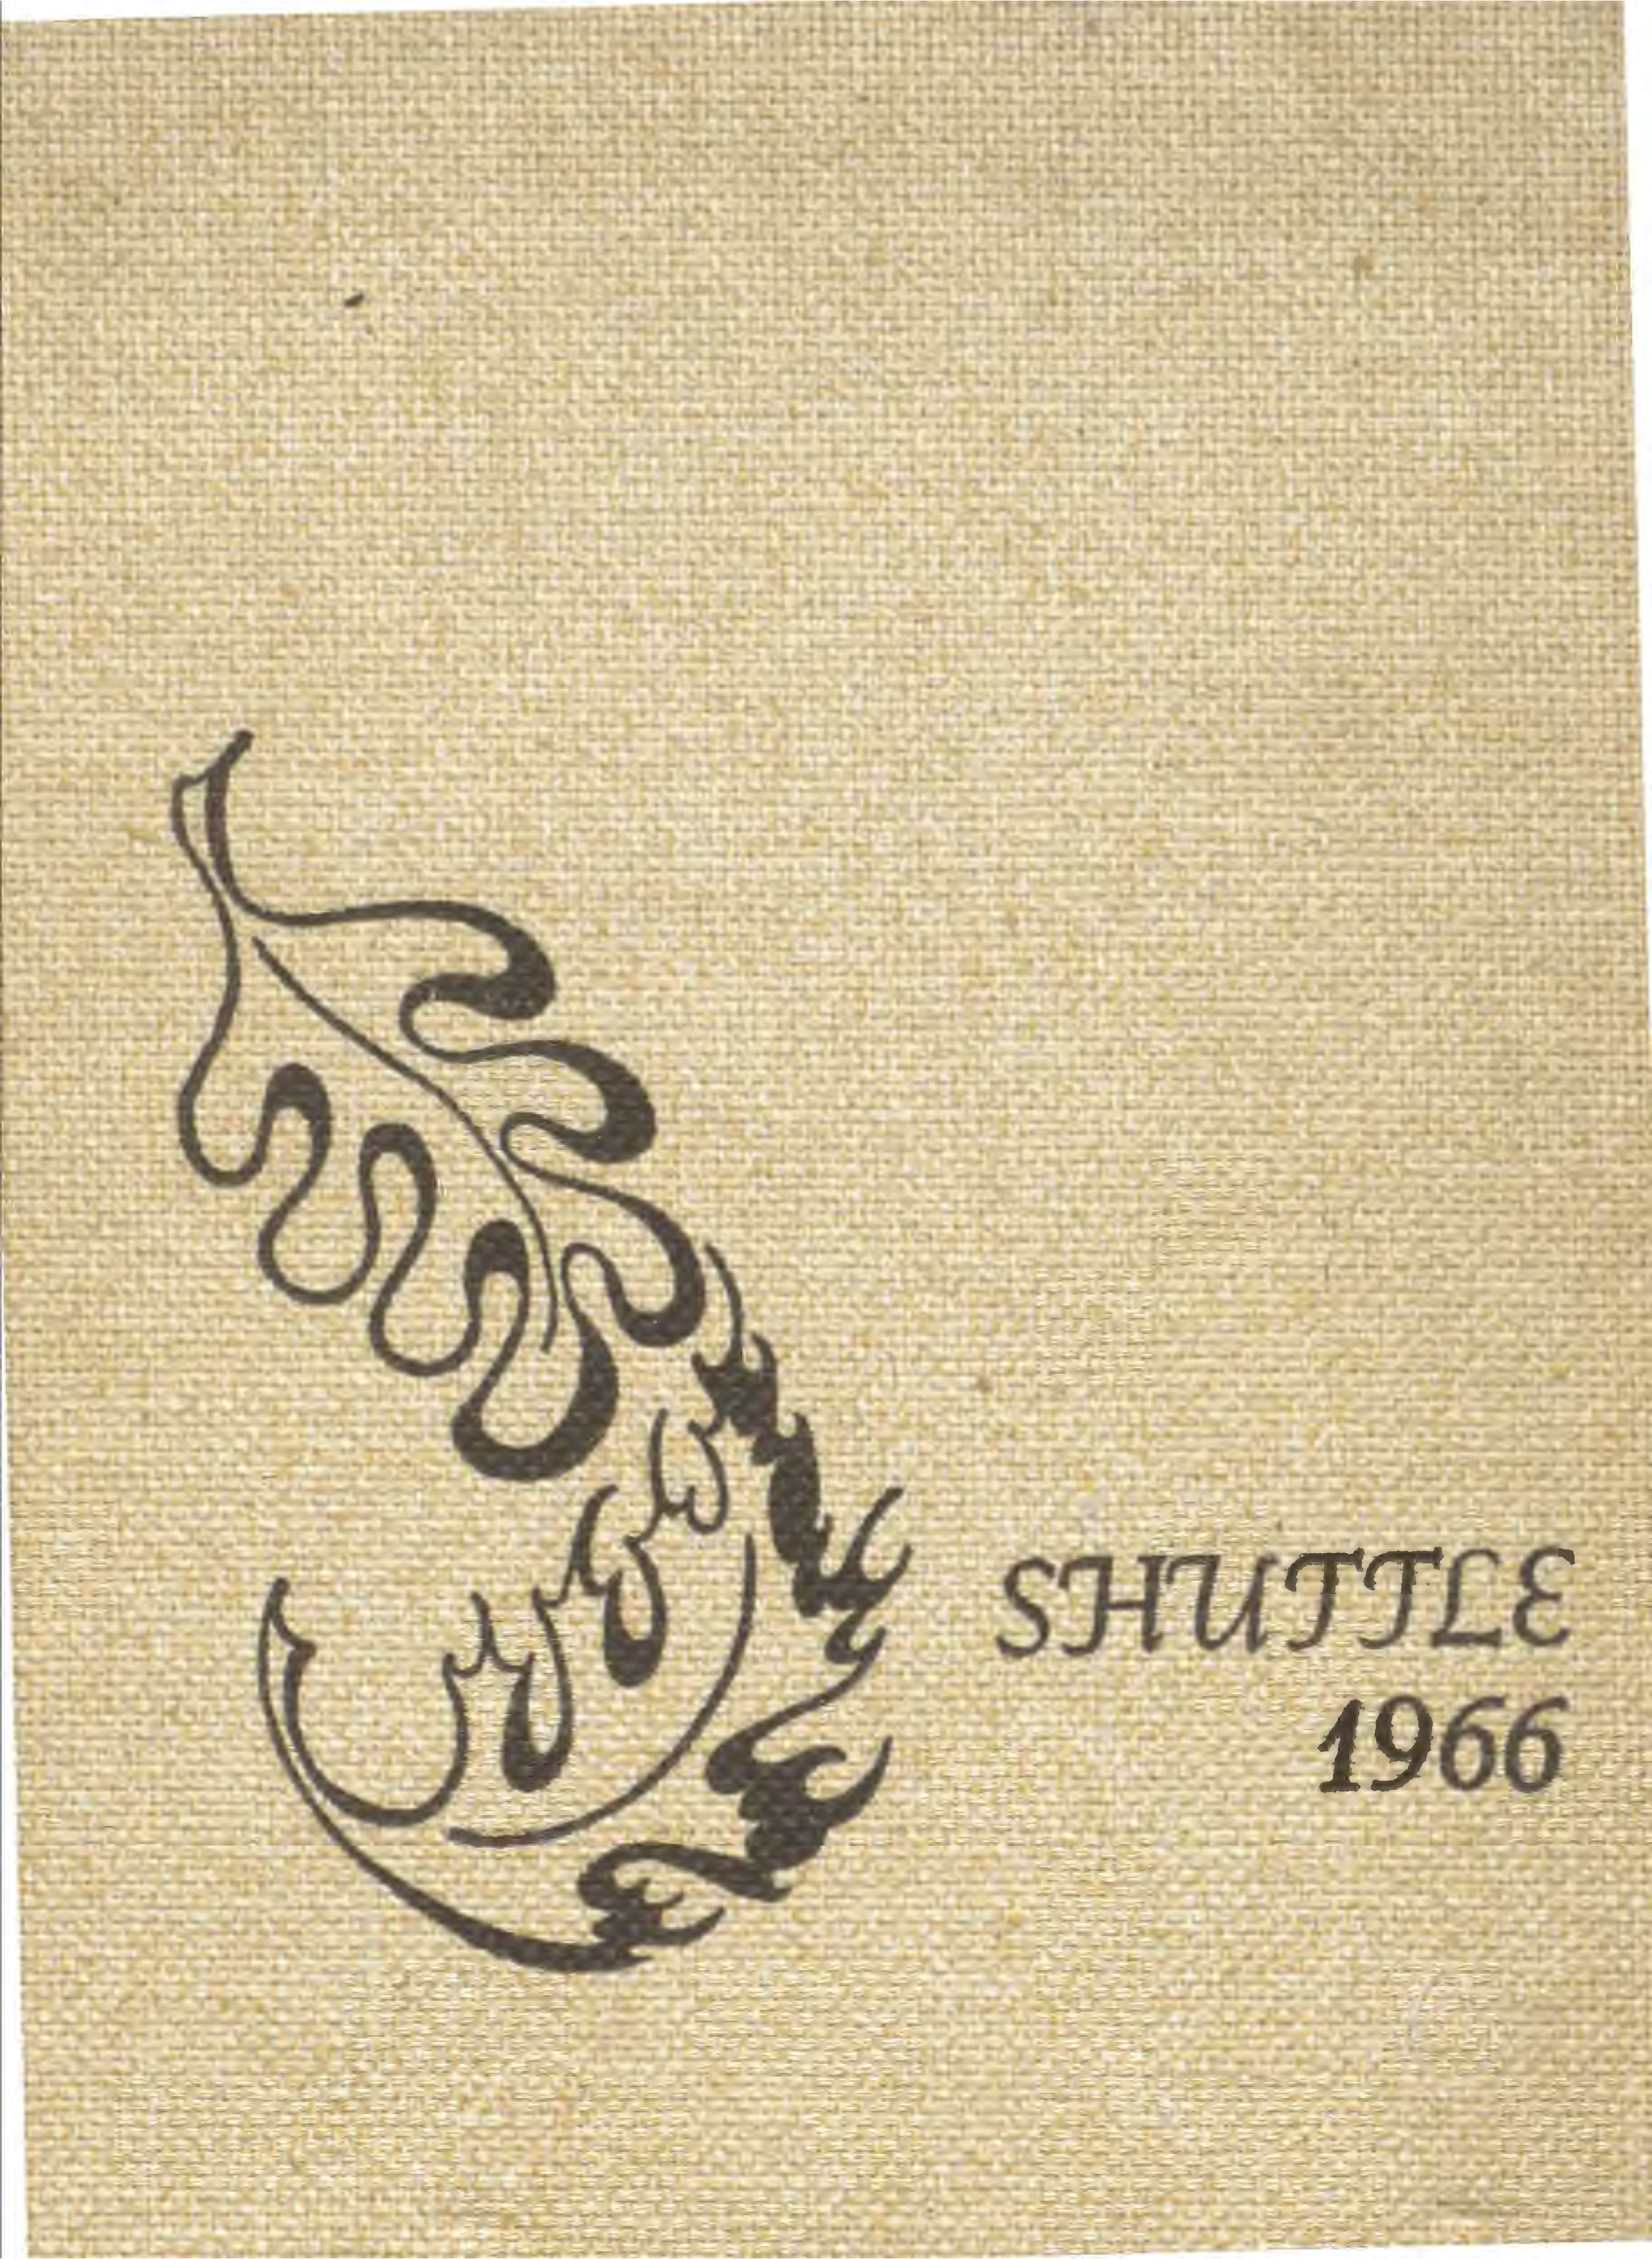 Shaw High School Yearbook 1966